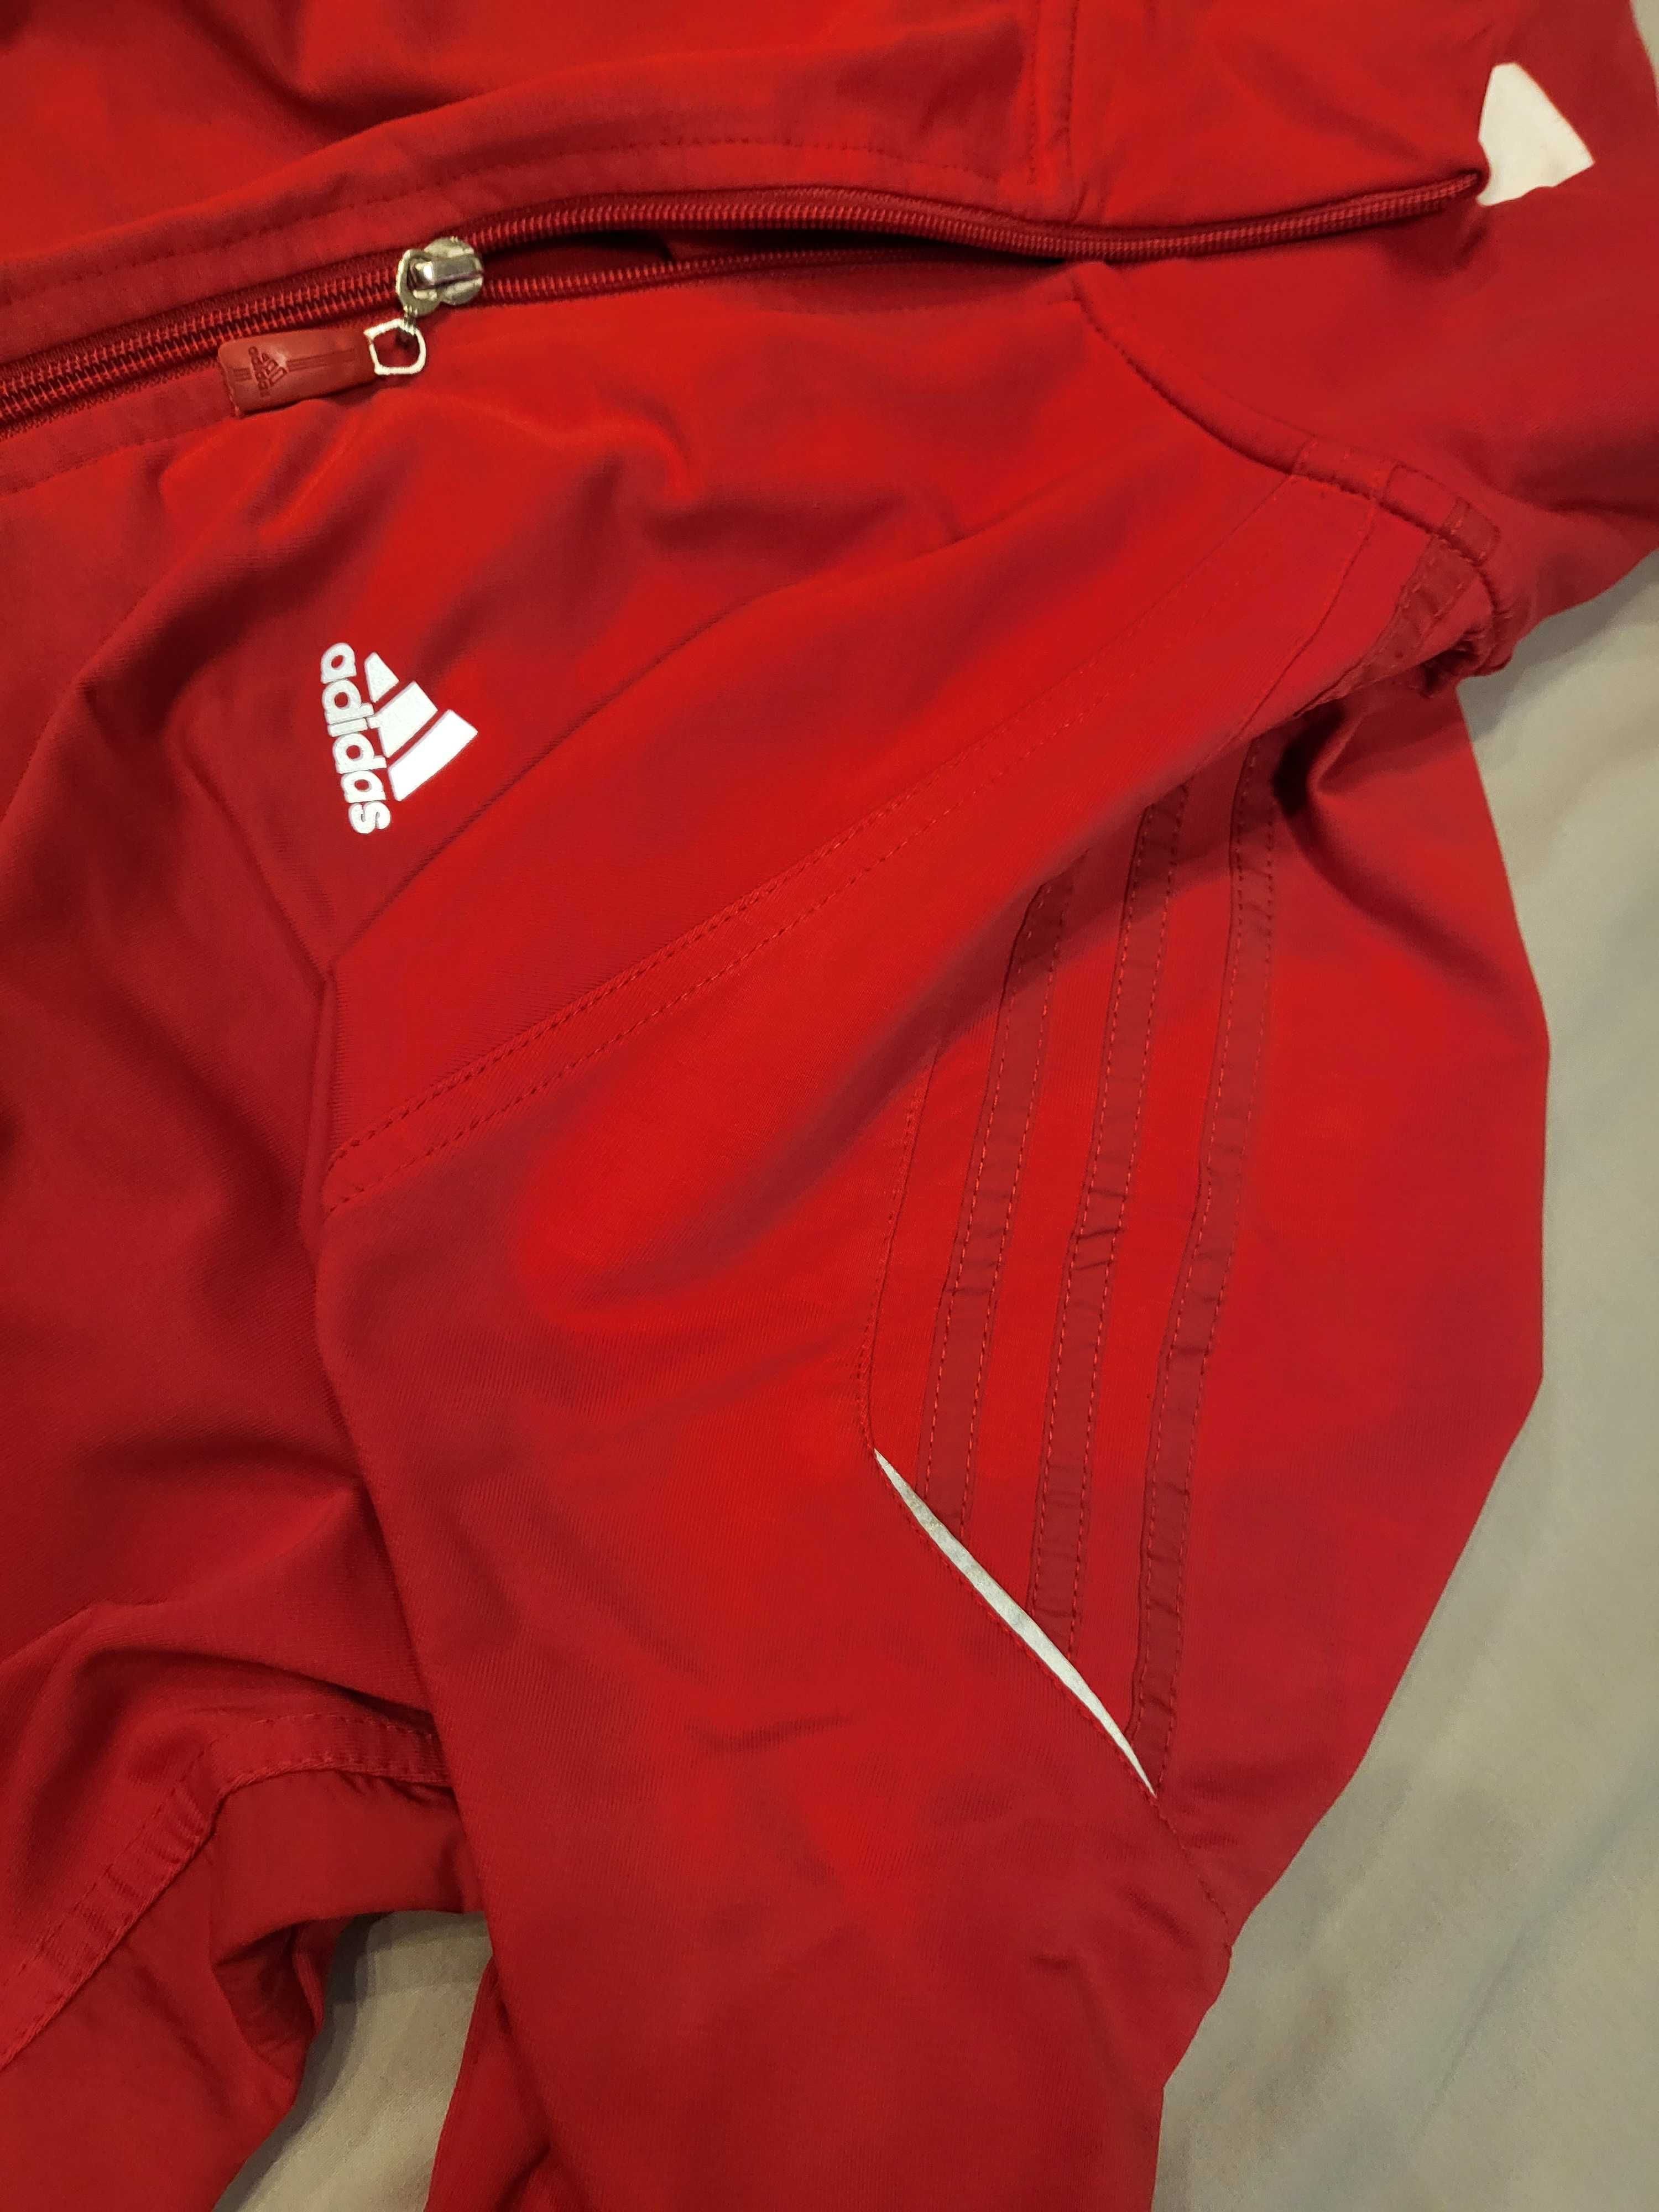 Bluza Adidas climacool, XL, culoare rosu Ferarri, impecabila